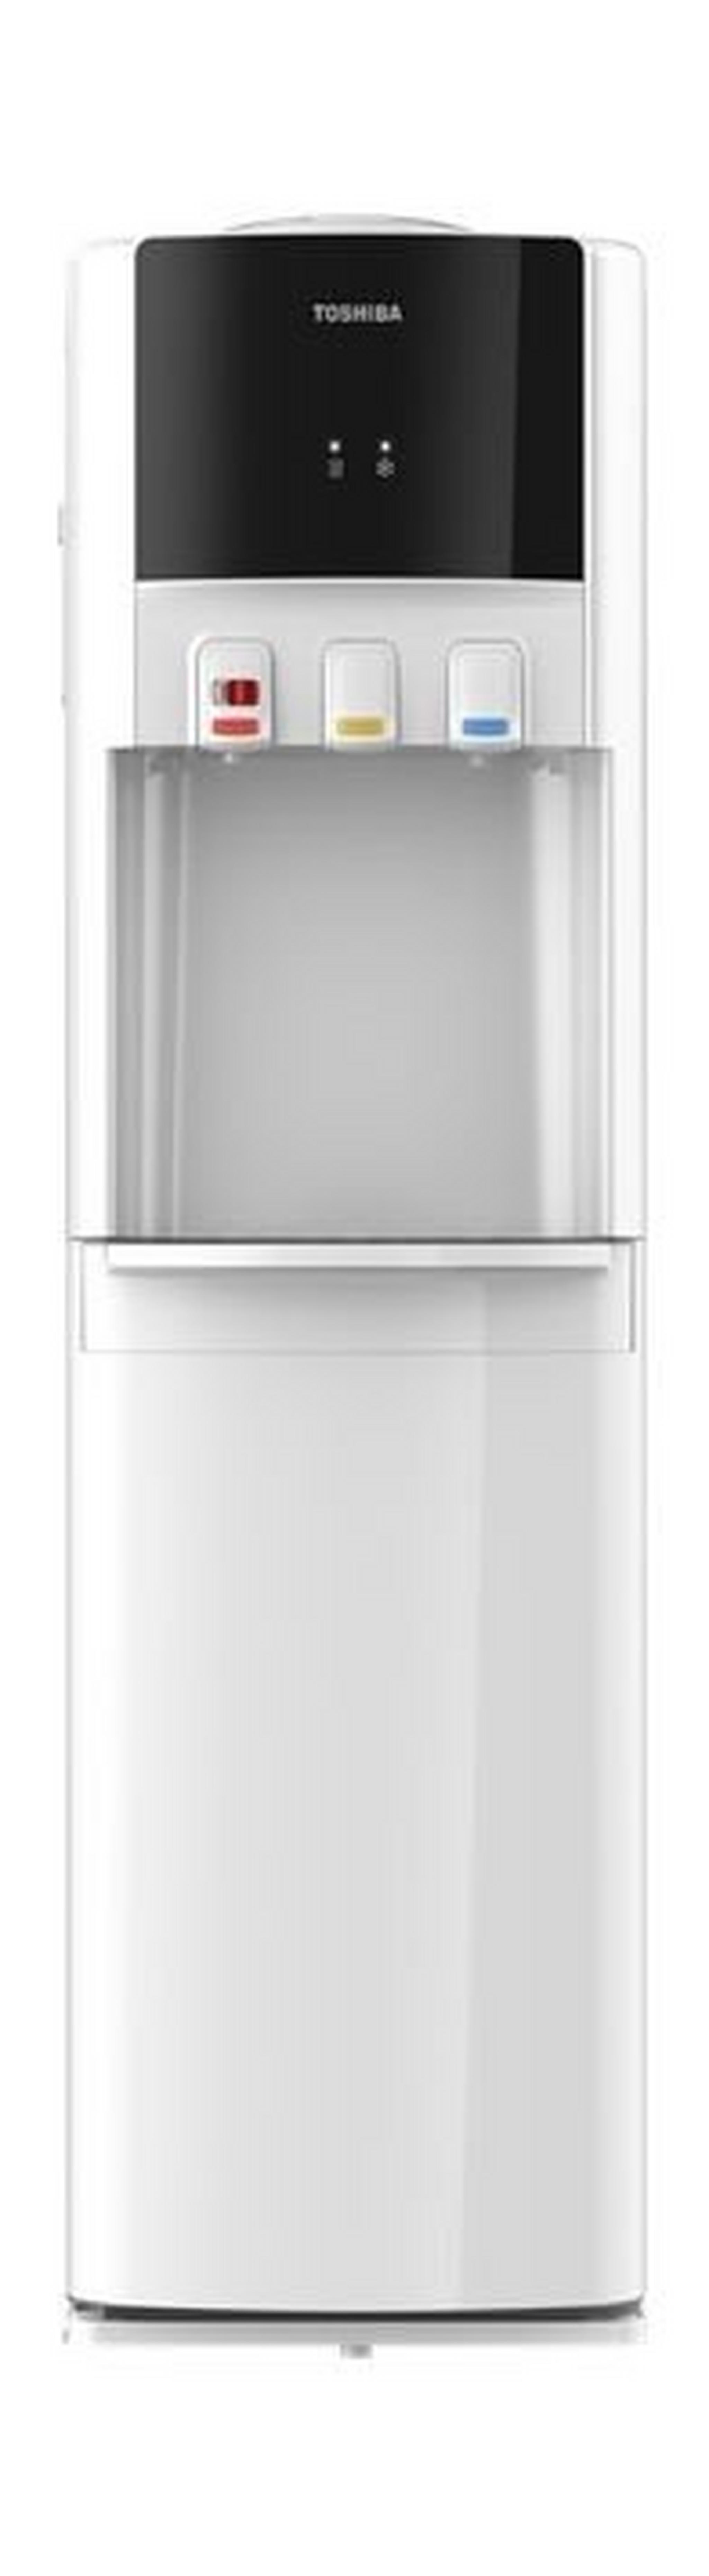 Toshiba Floor Standing Water Dispenser (YL1766S-W) - White